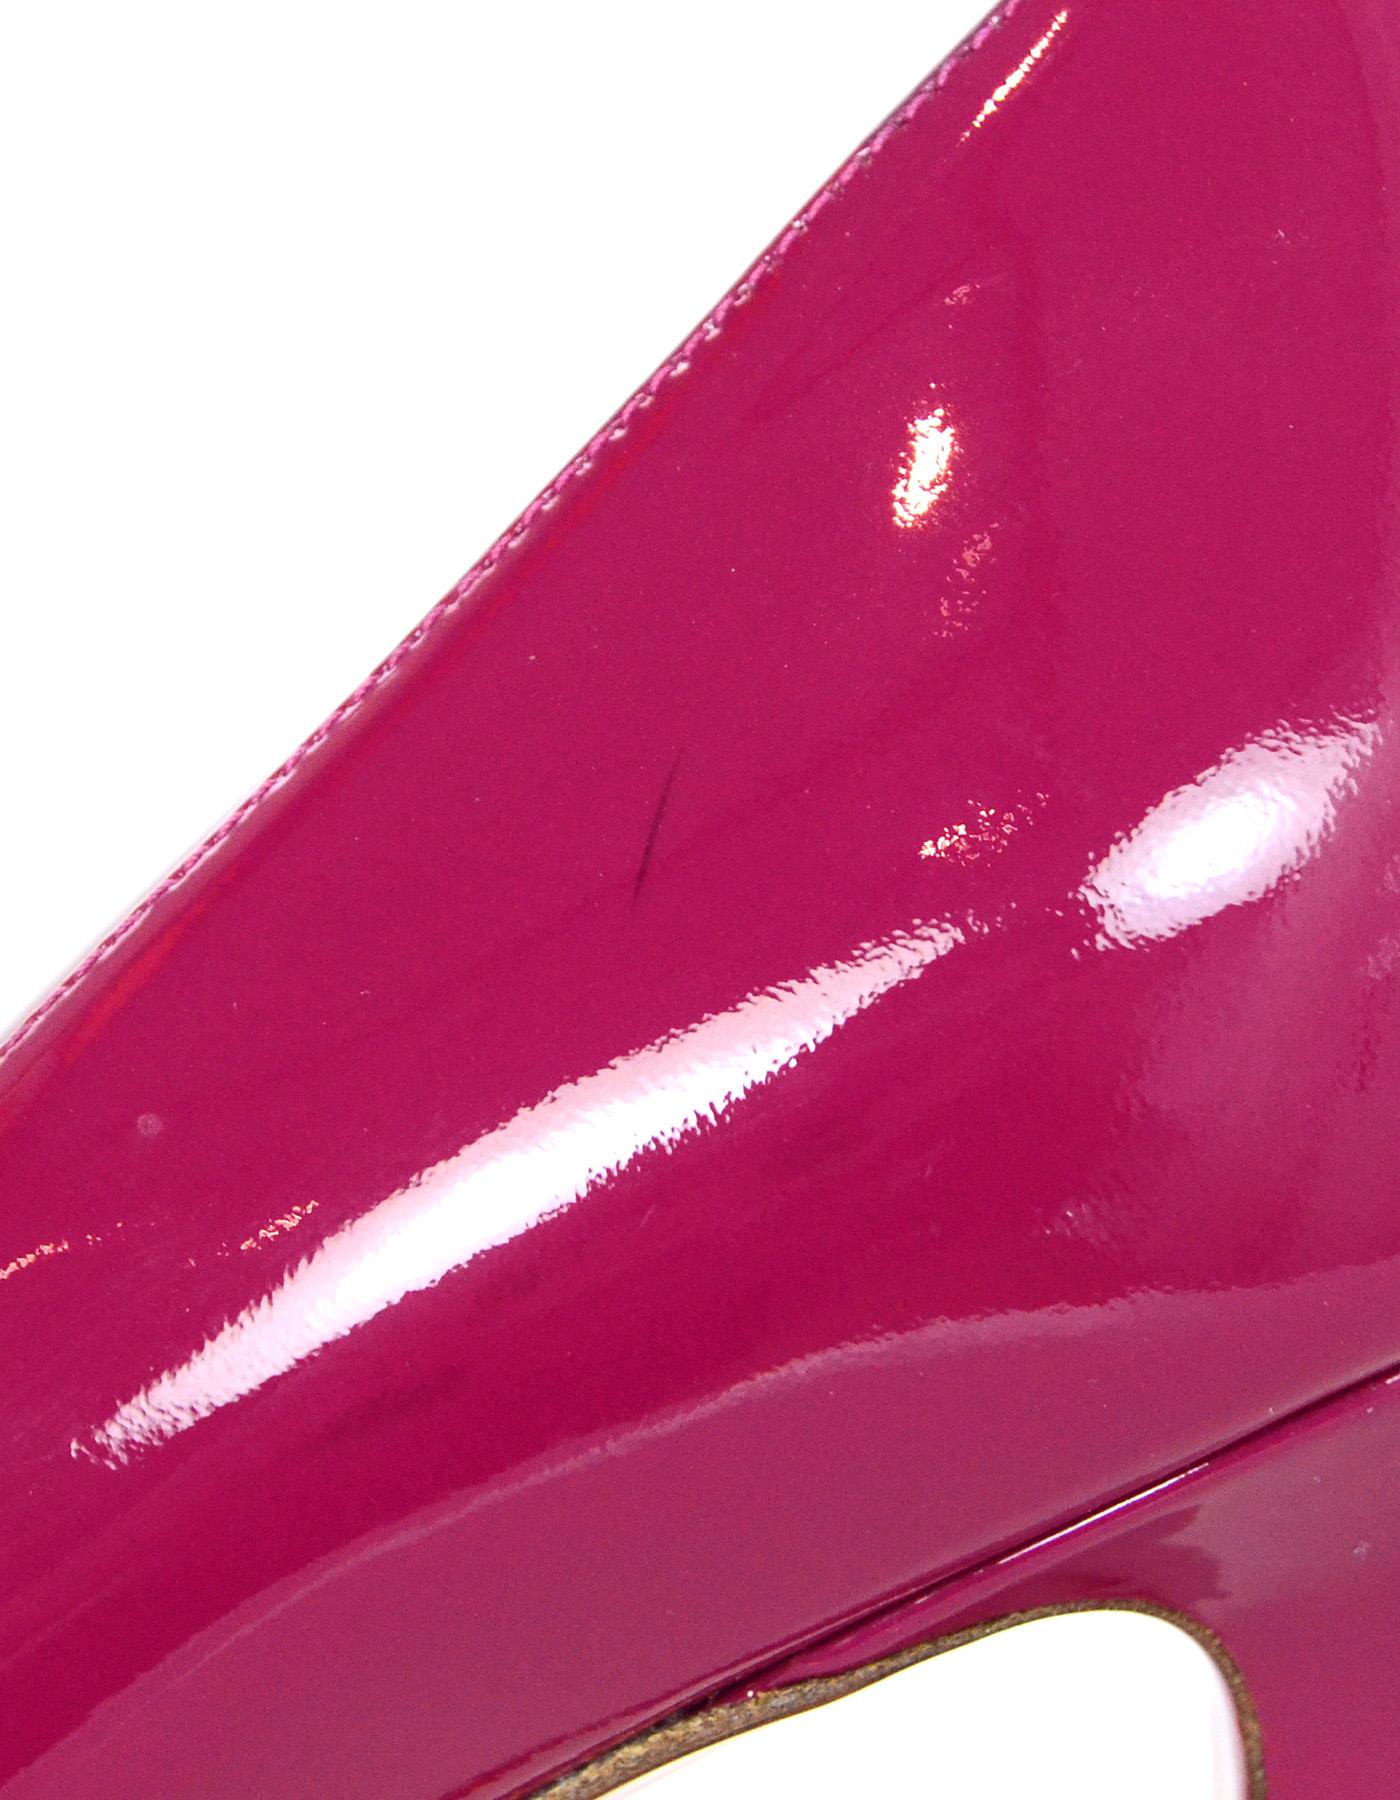 Women's Christian Louboutin Pink Patent Leather Bianca 120 Platform Pumps Sz 39 rt. $845